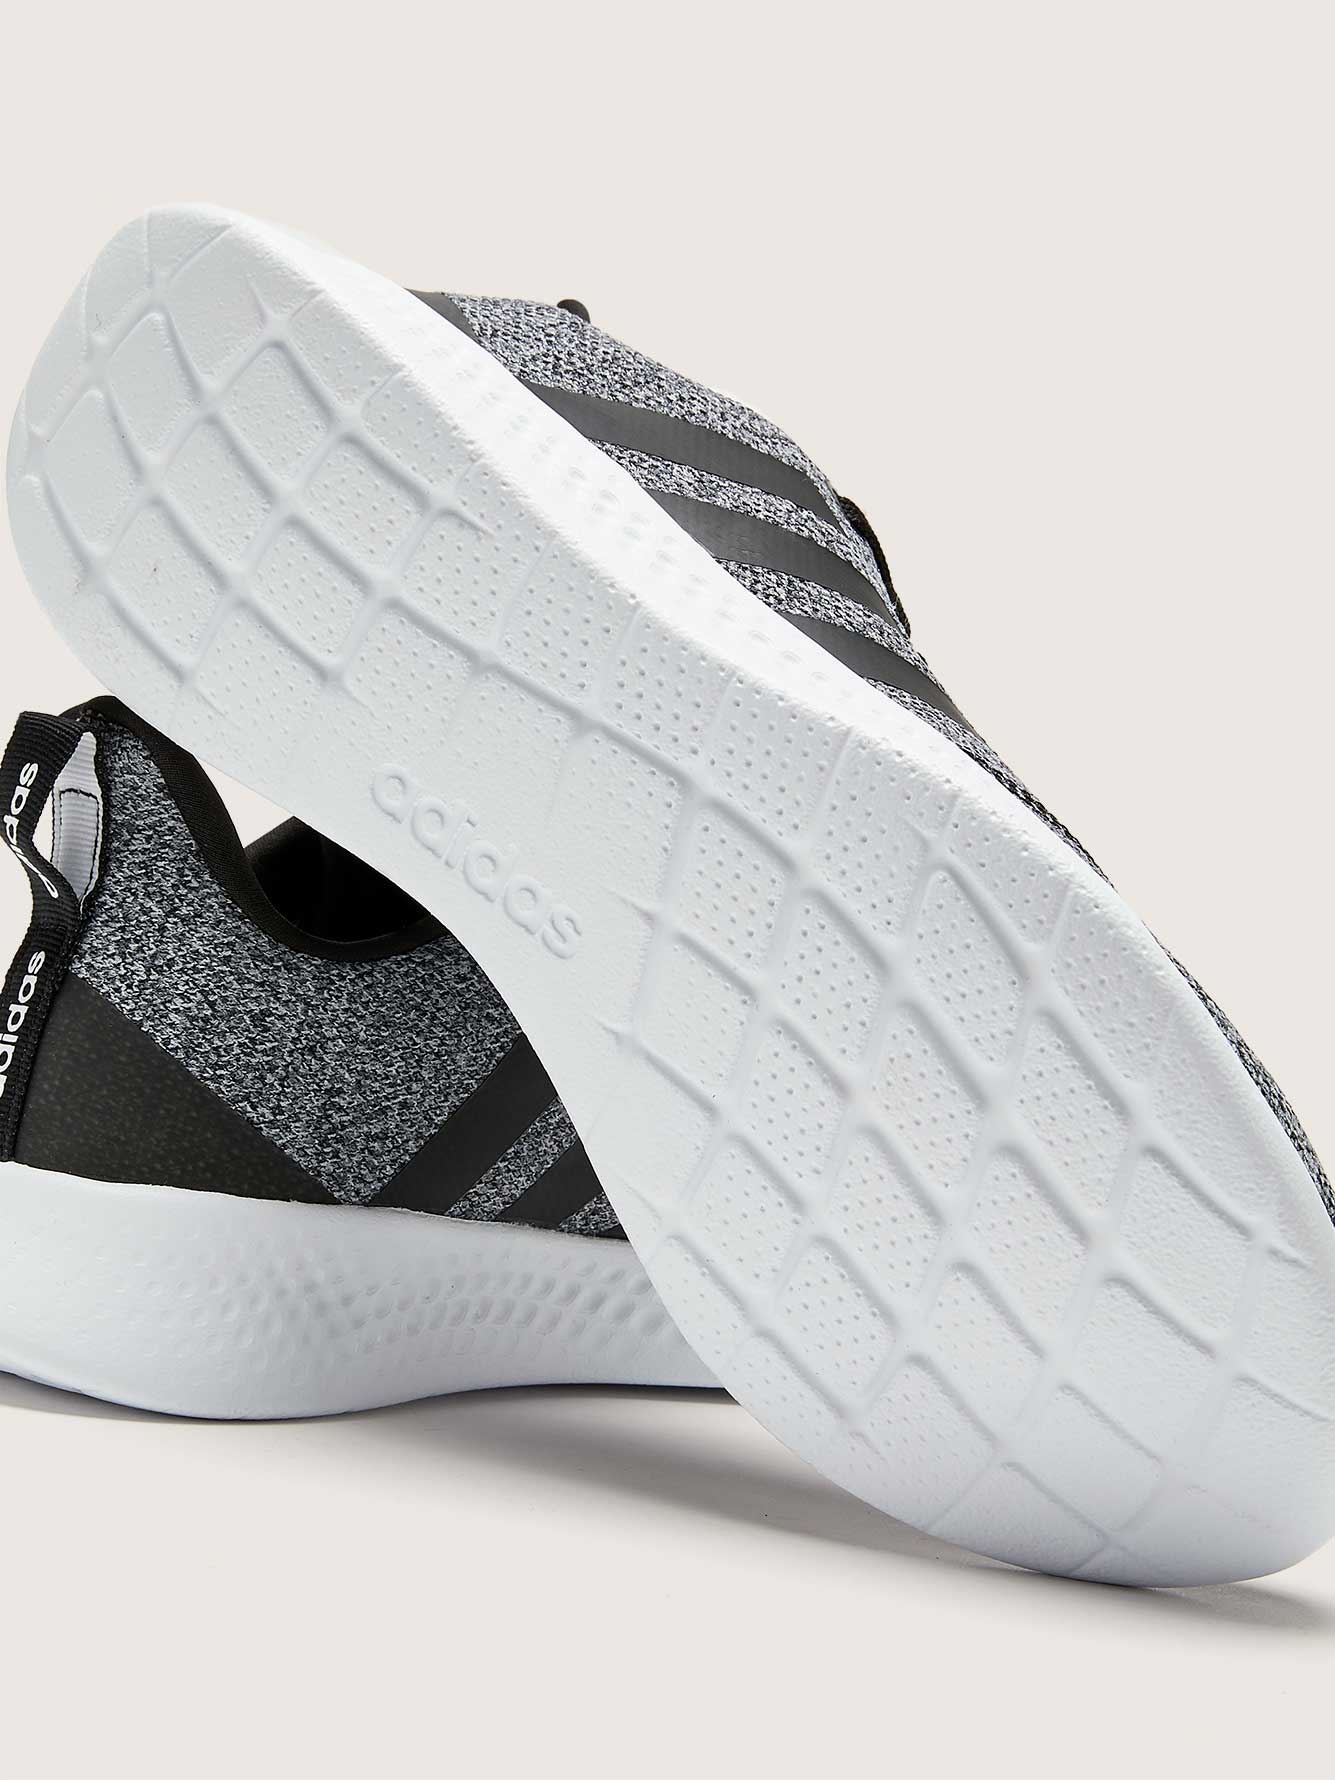 Wide Width Puremotion Sneaker - adidas